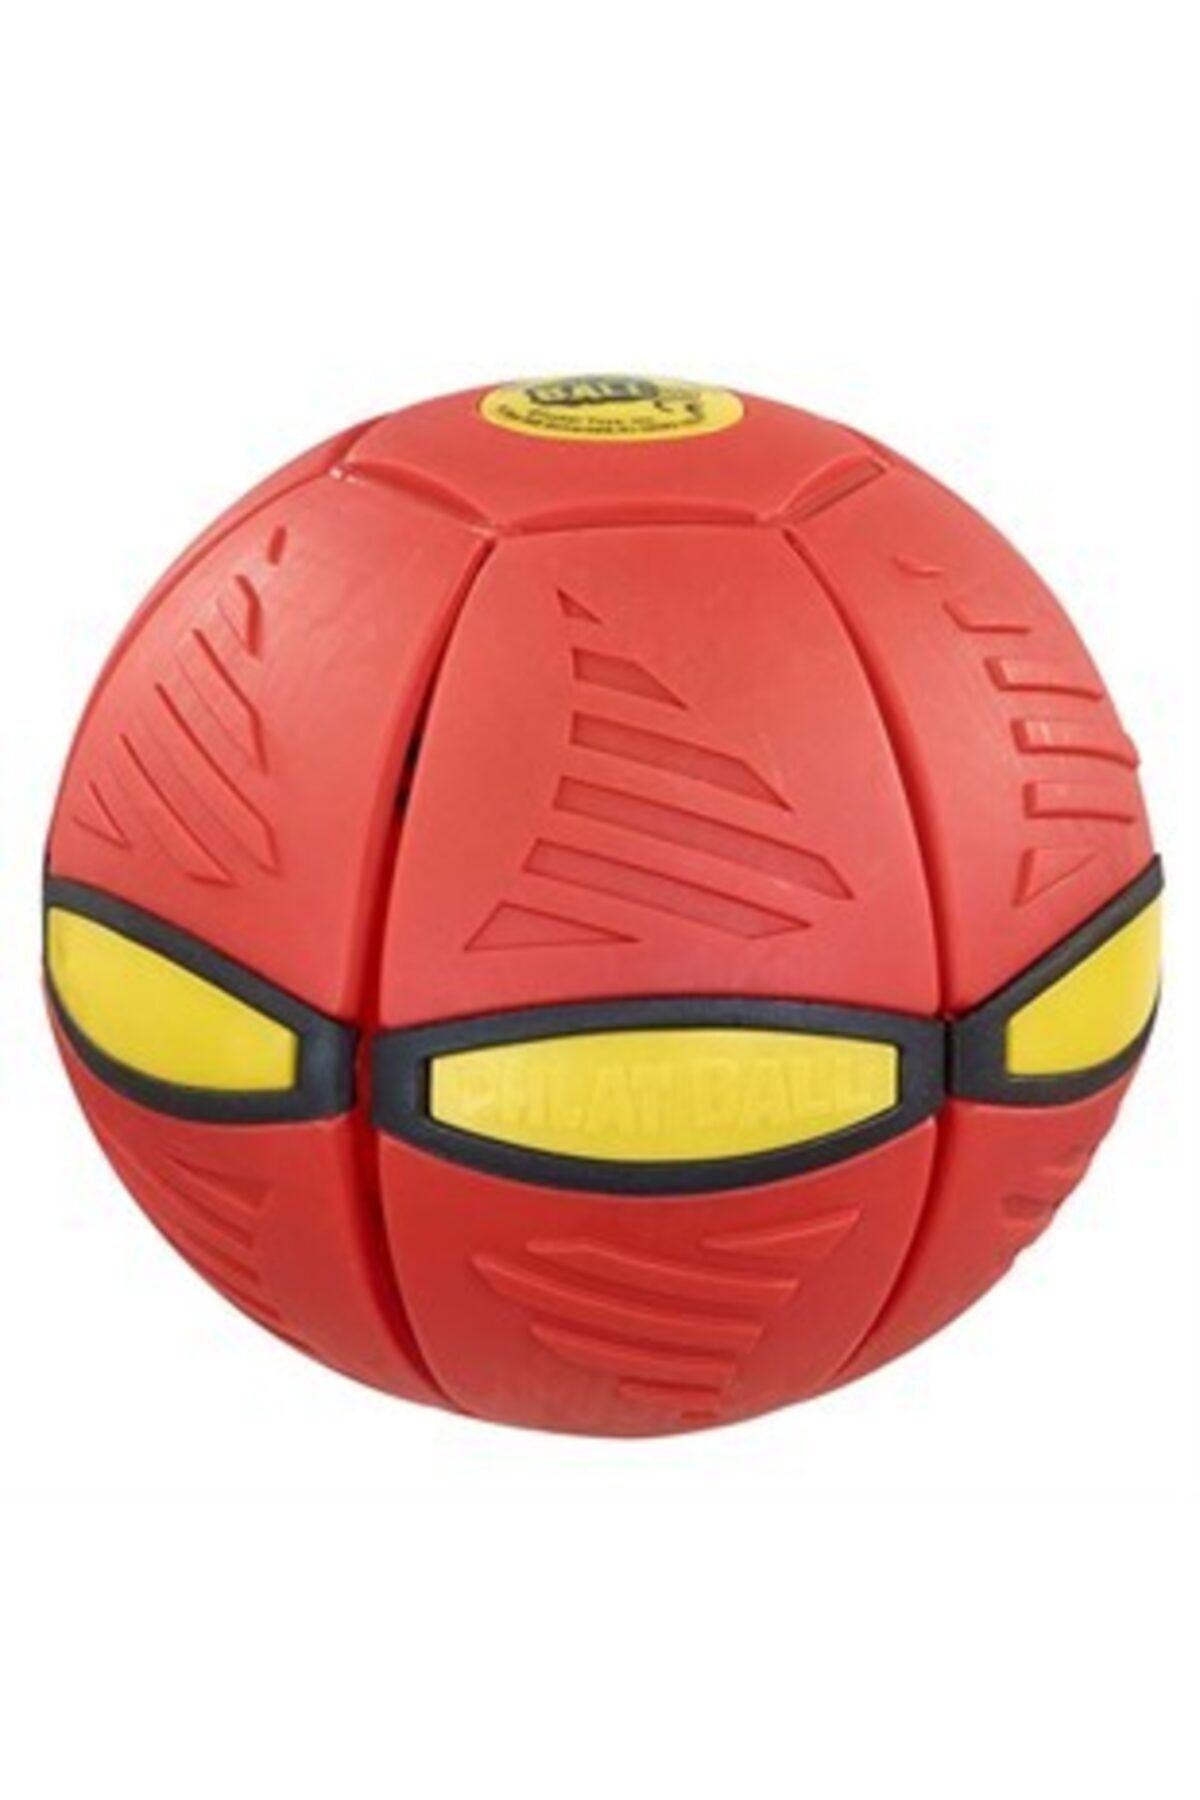 Mark ball. Phlat Ball игрушка. Плоский мячик. Летающий диск мяч. Играв сплюмнутый мяч.